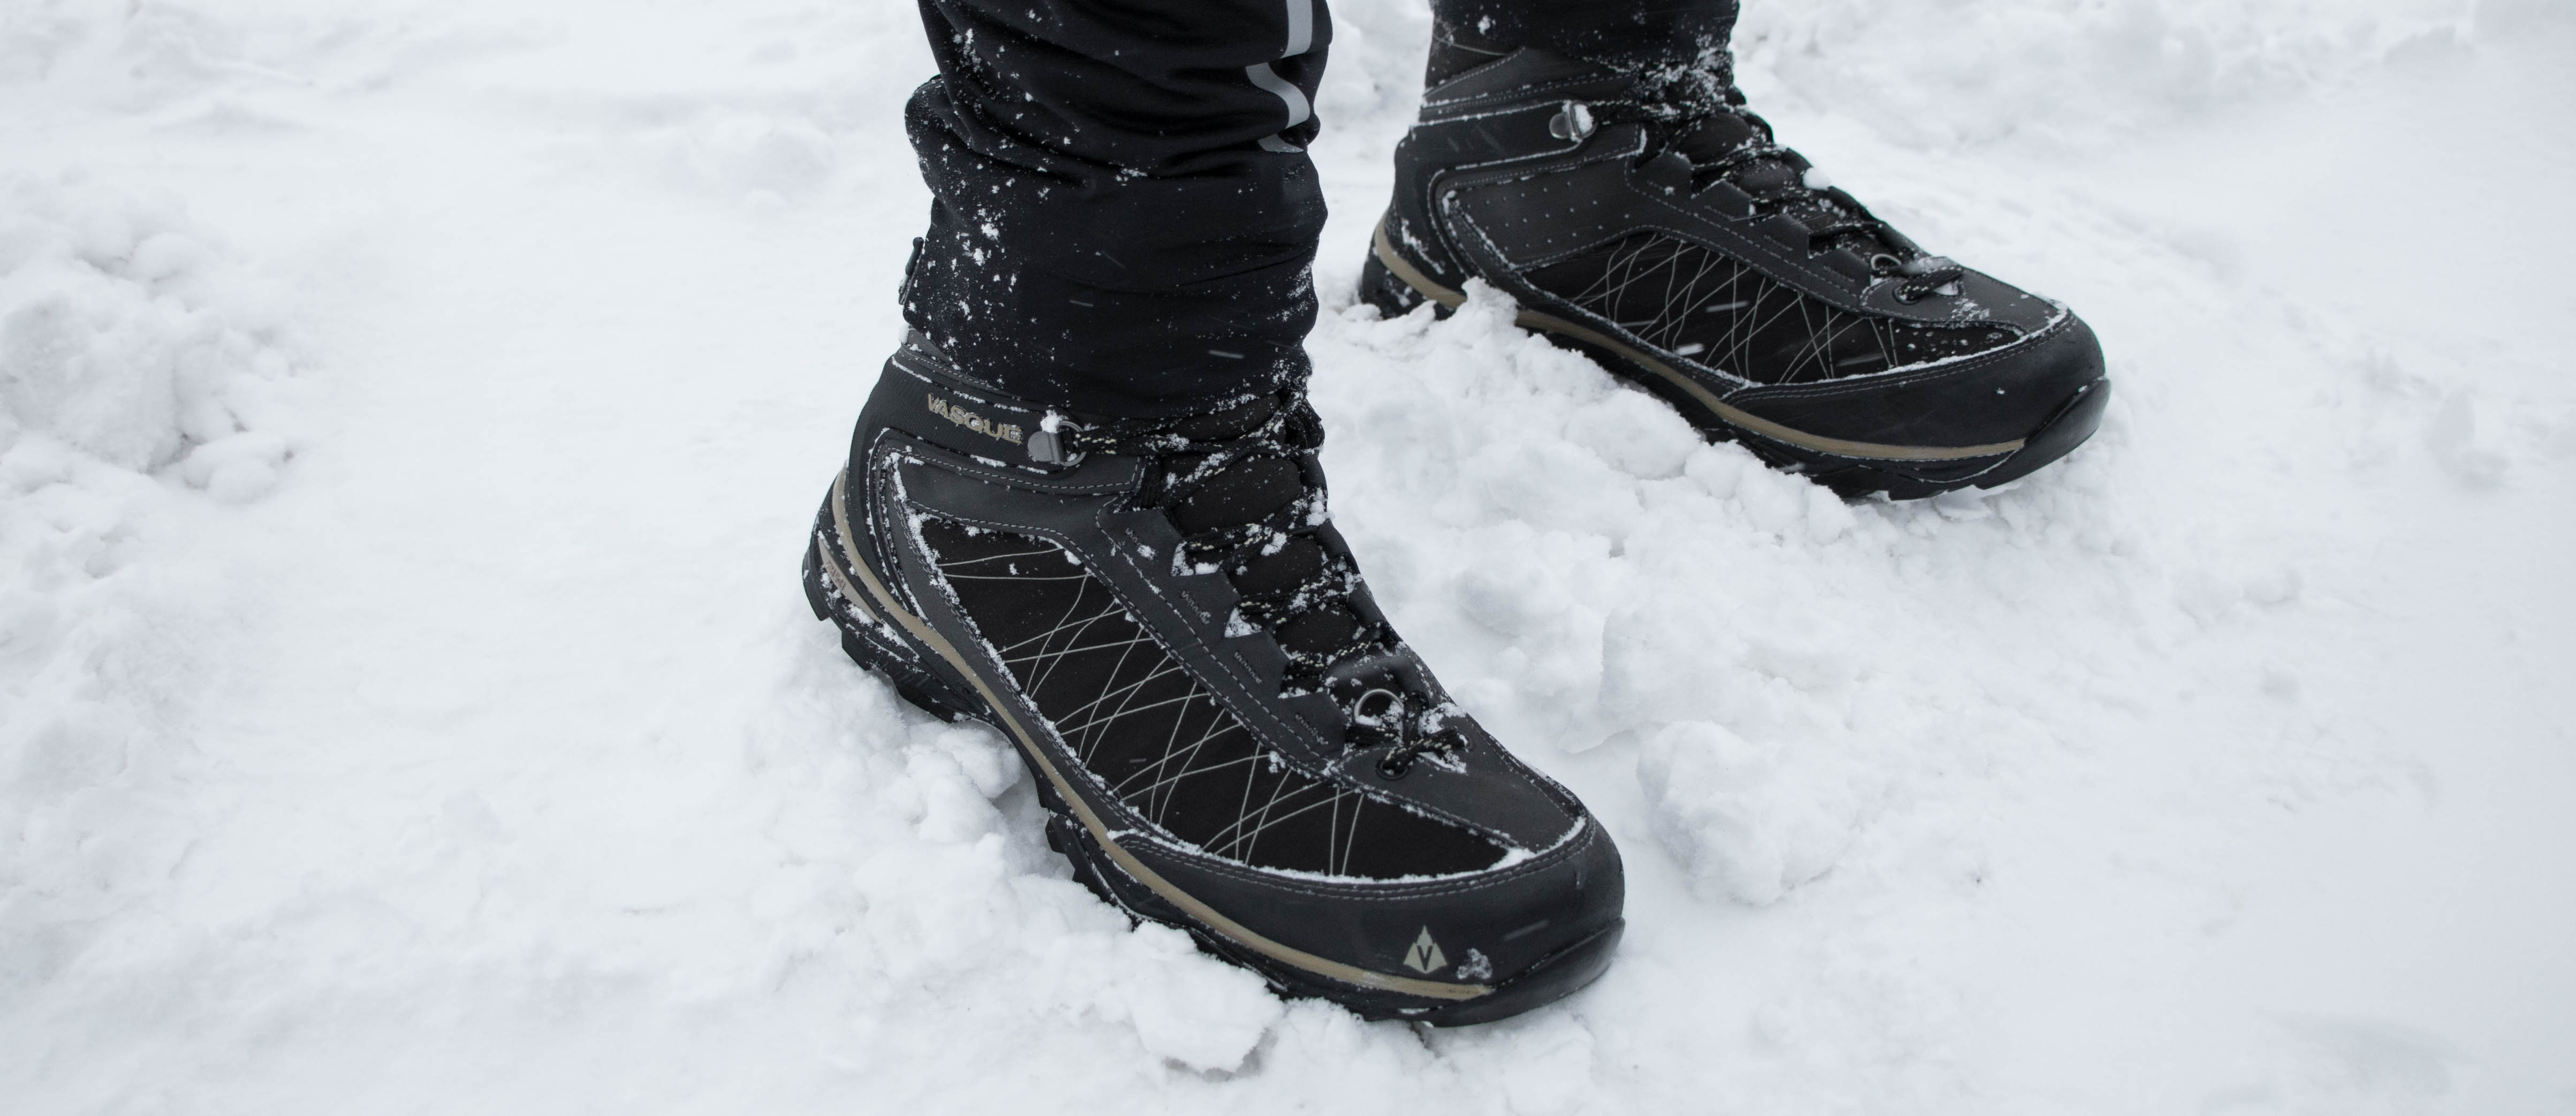 vasque coldspark ultradry winter boots